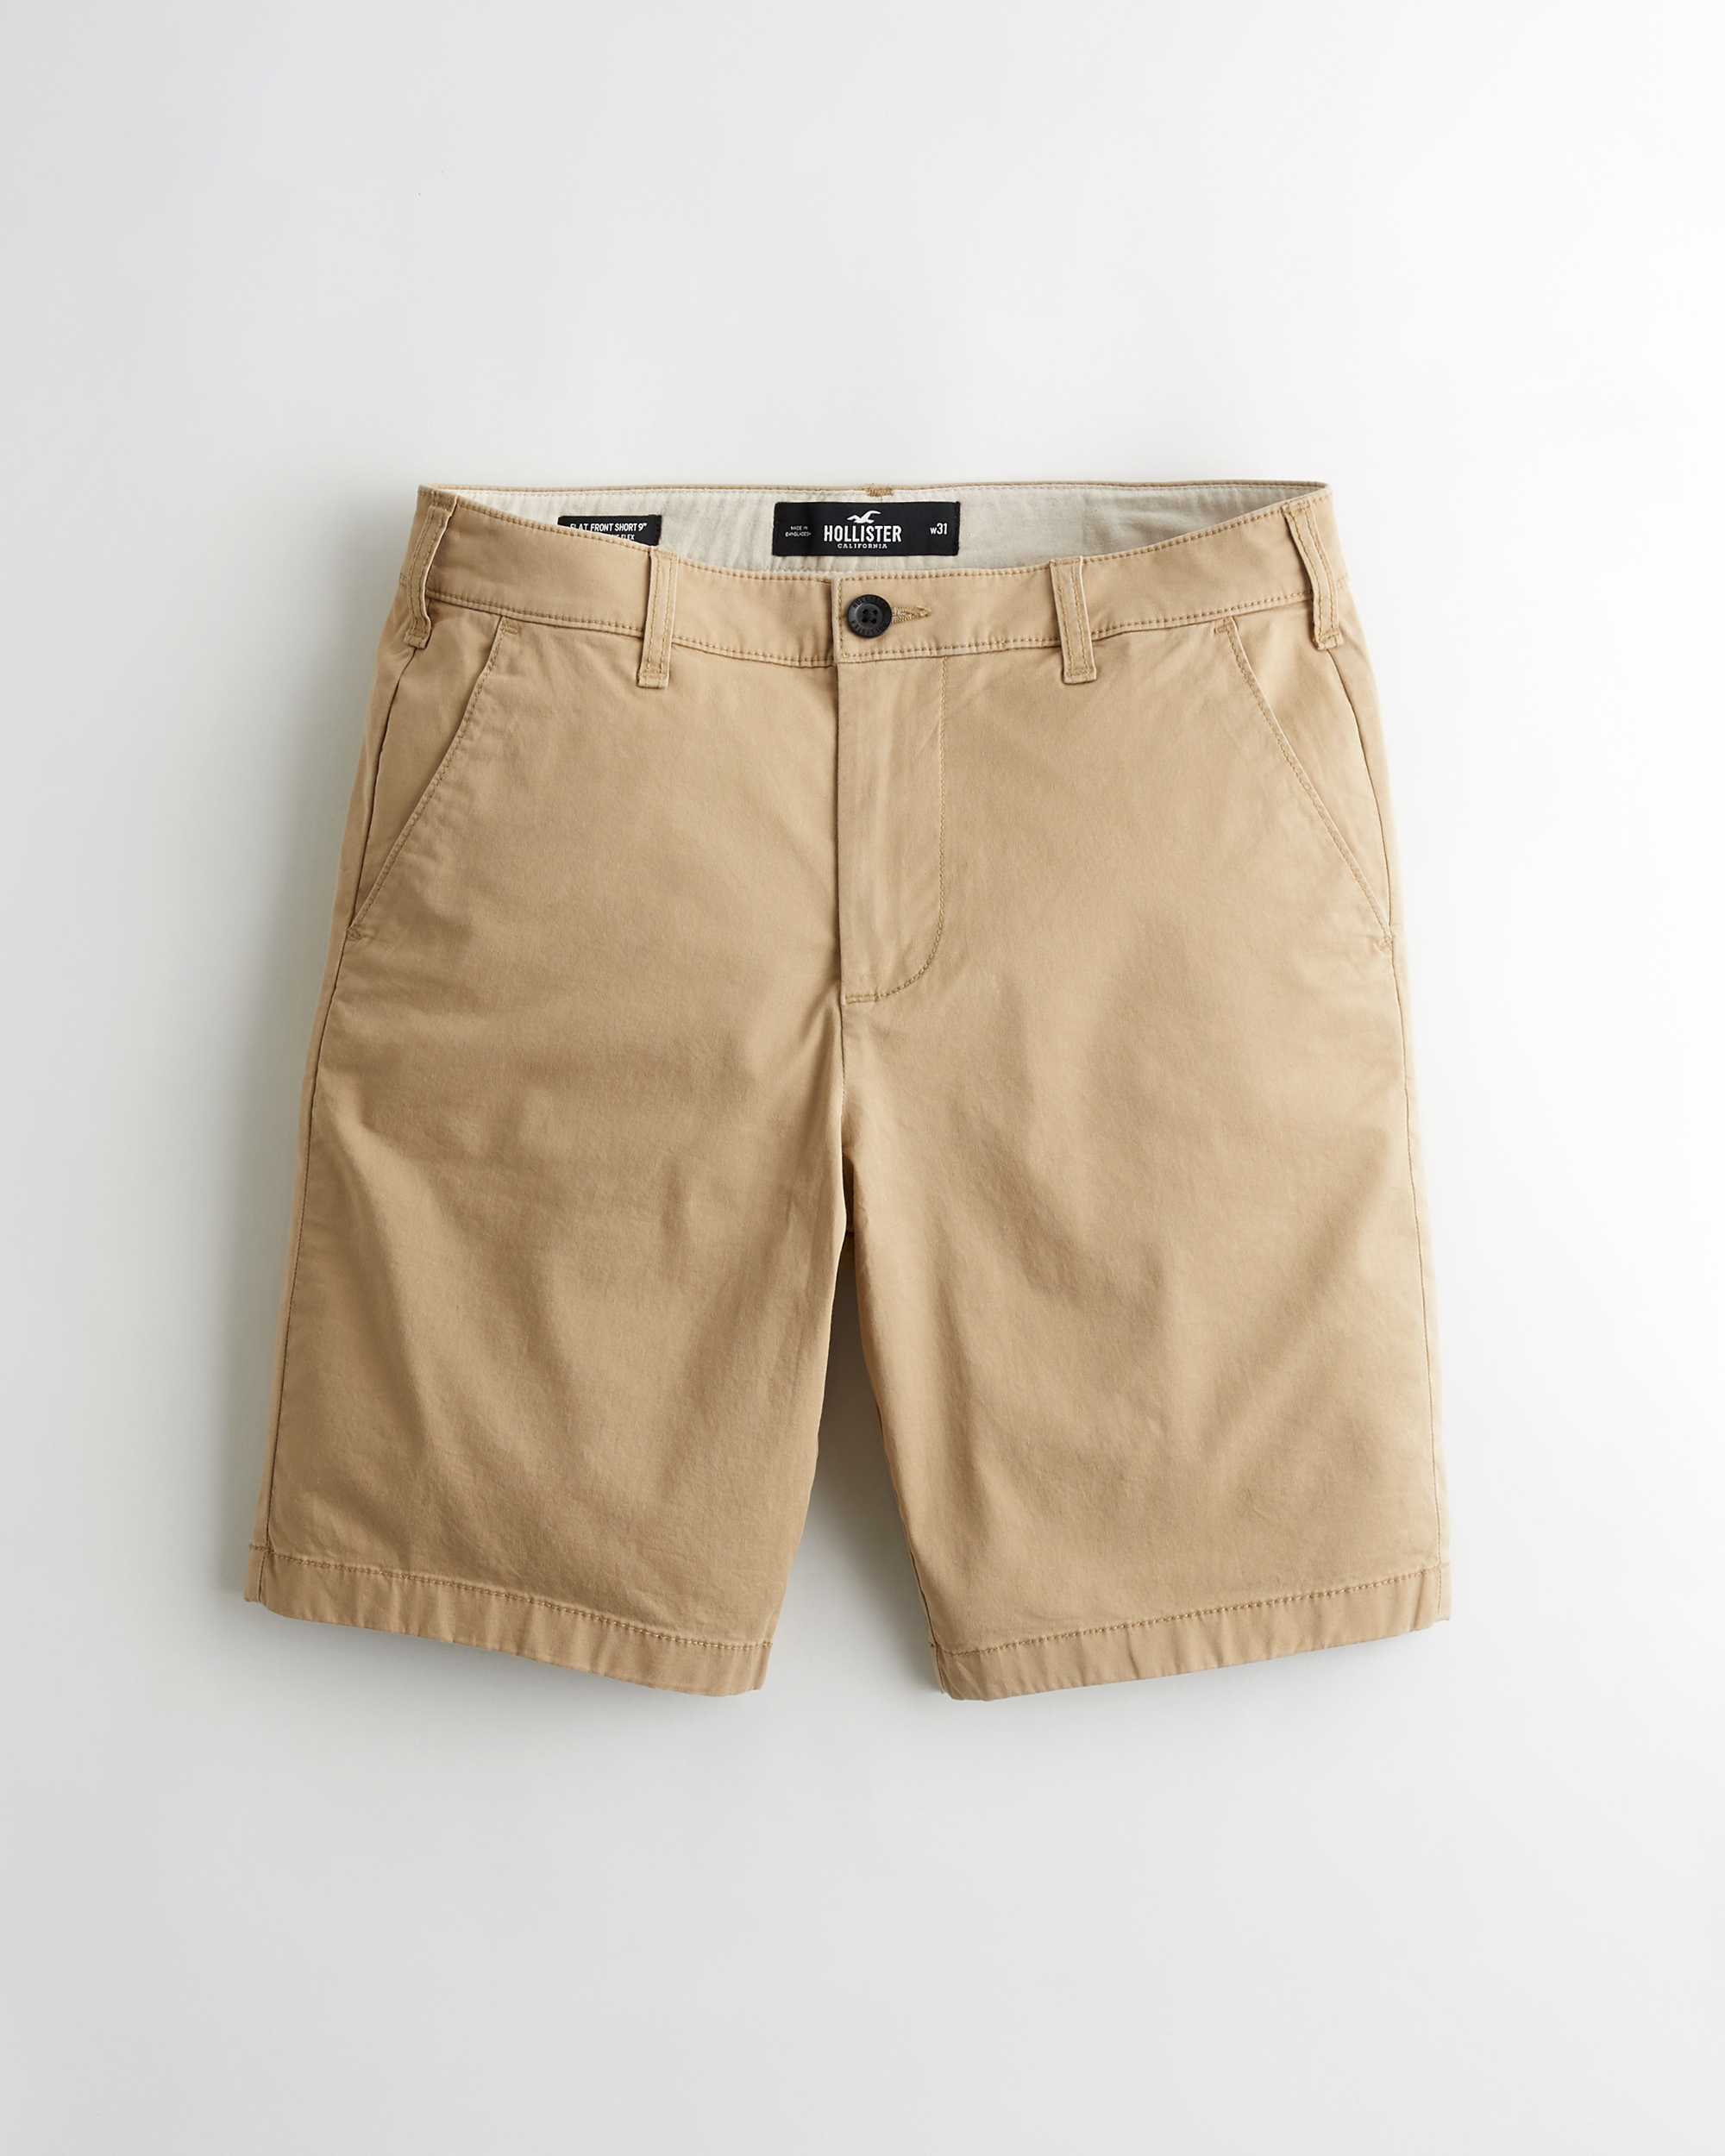 Guys Shorts - Comfy, Smart \u0026 More 